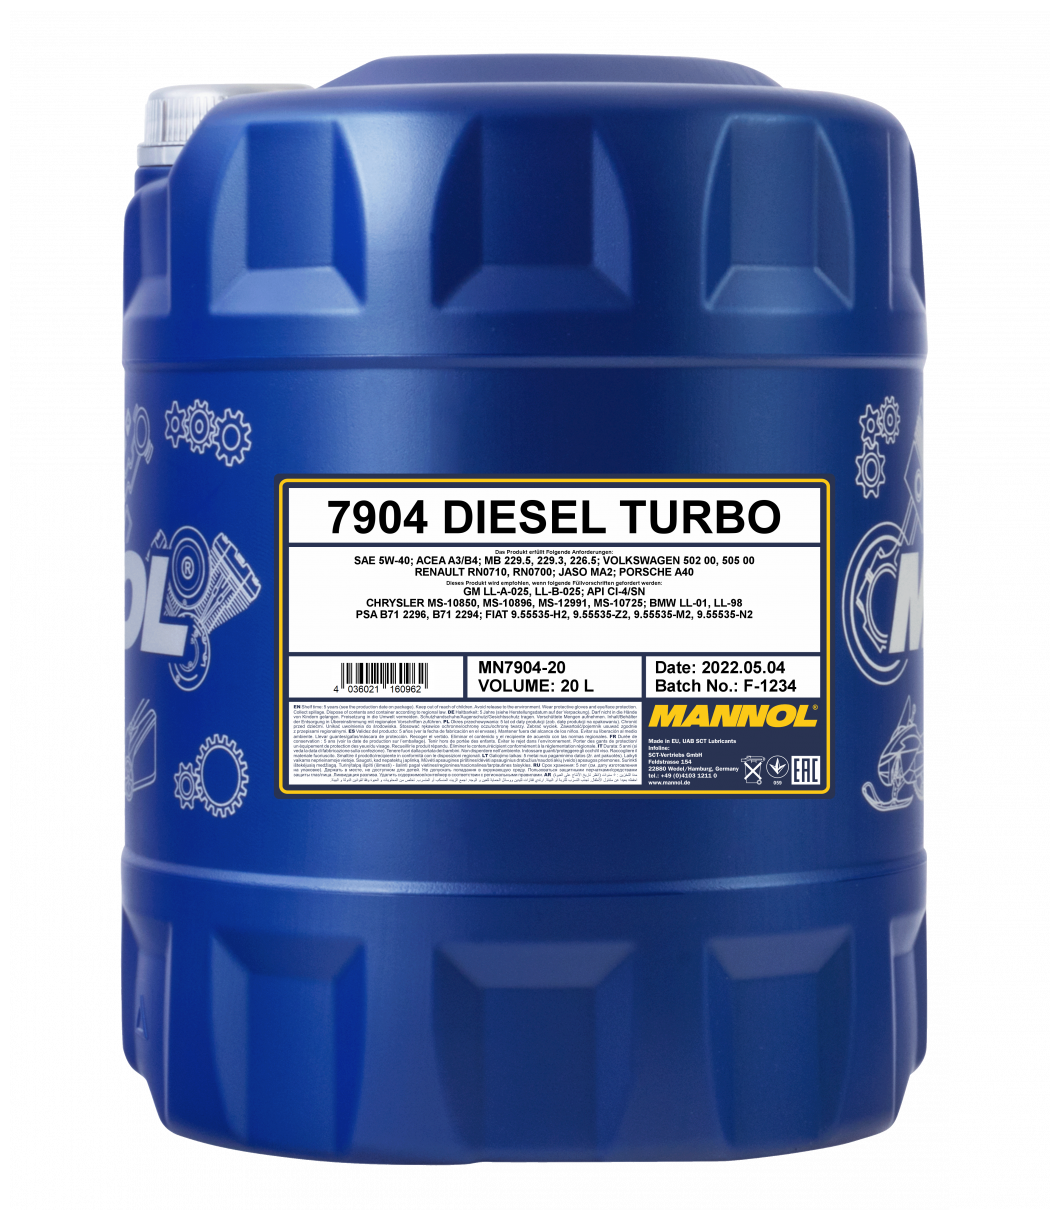 Масло моторное Mannol 7904 Diesel Turbo 5W-40 20L, 1052